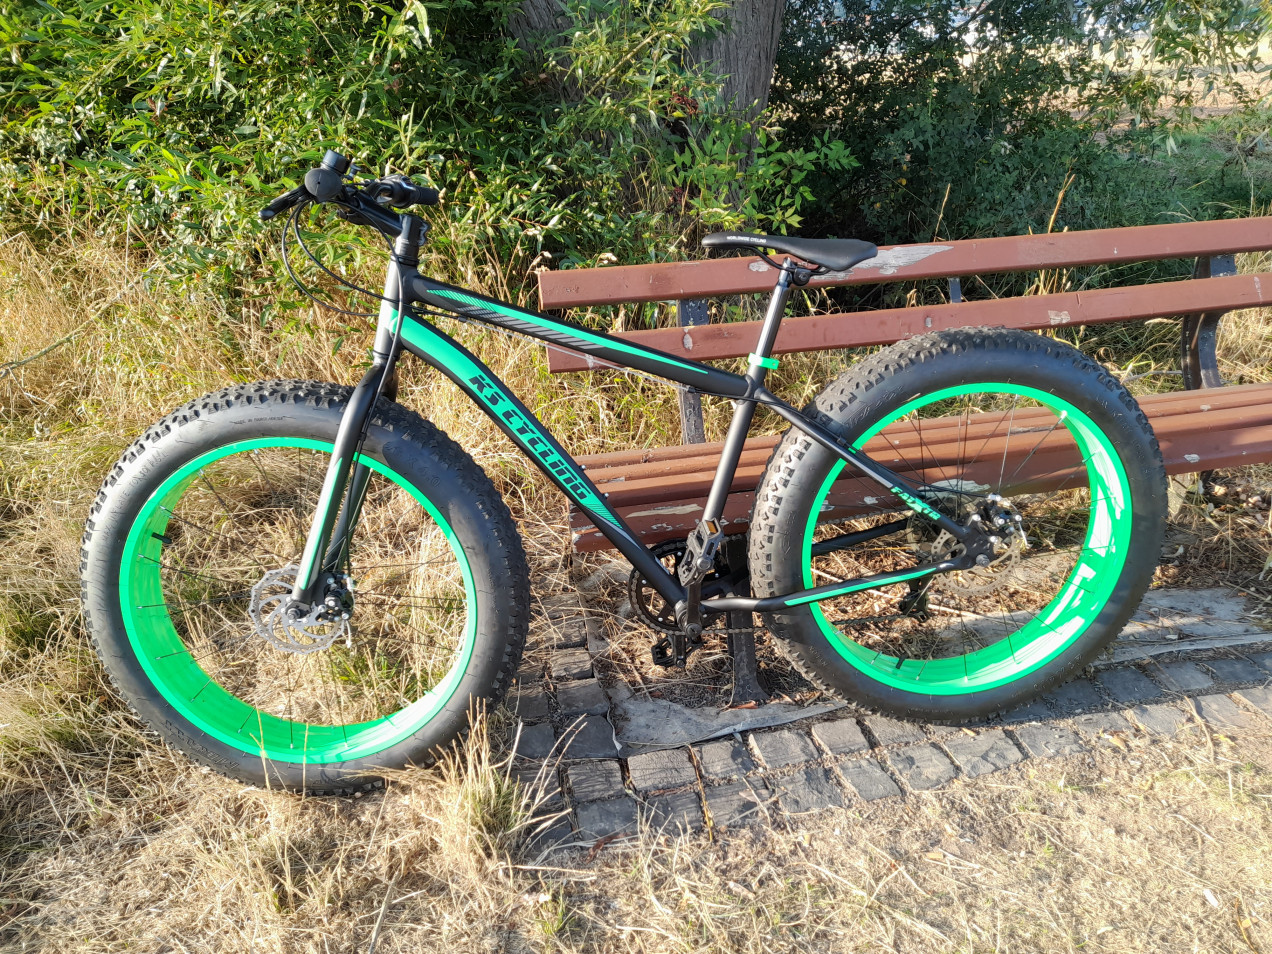 Voordracht horizon vallei KS Cycling Fatbike 26" FAT XTR - schwarz grün gebruikt in xl | buycycle